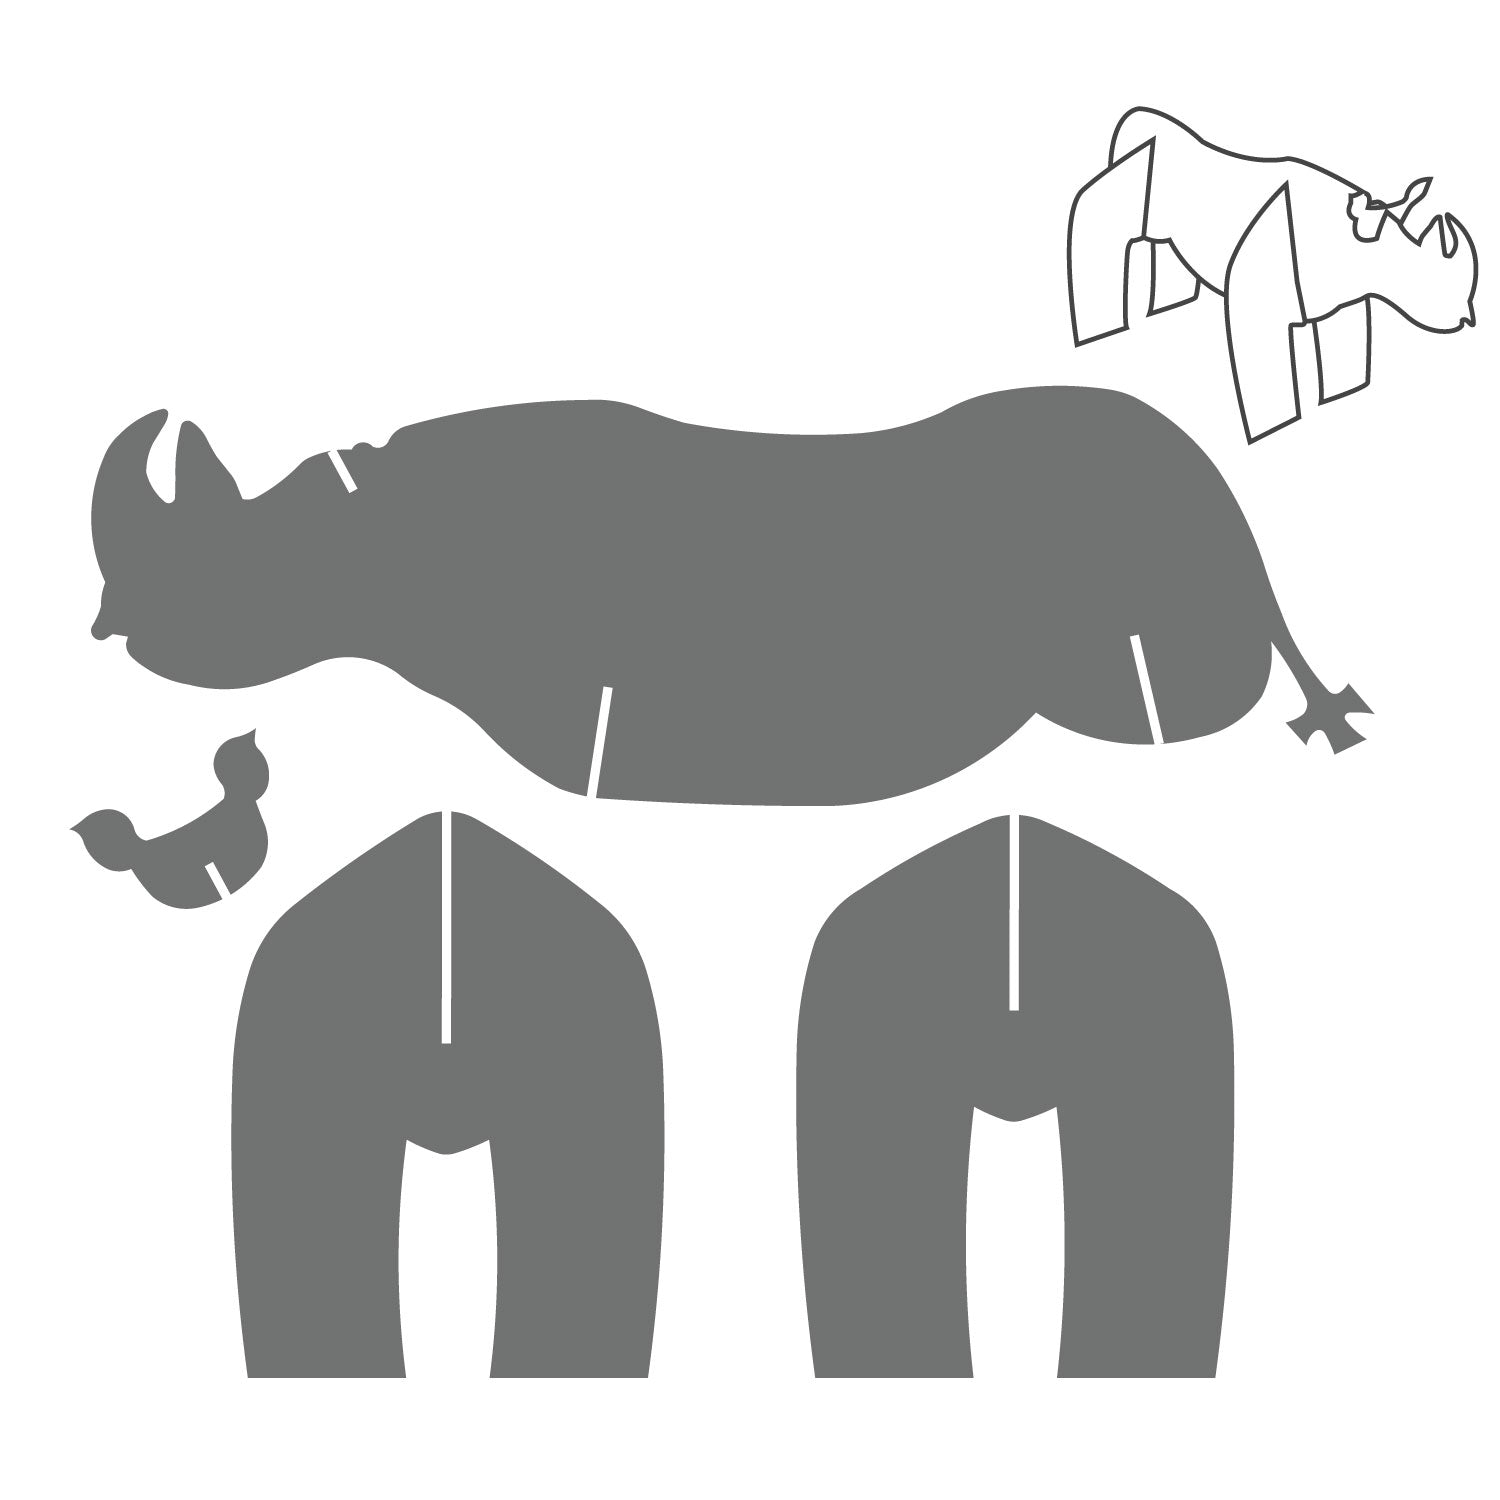 Rhinoceros 3D 7.30.23163.13001 download the last version for windows